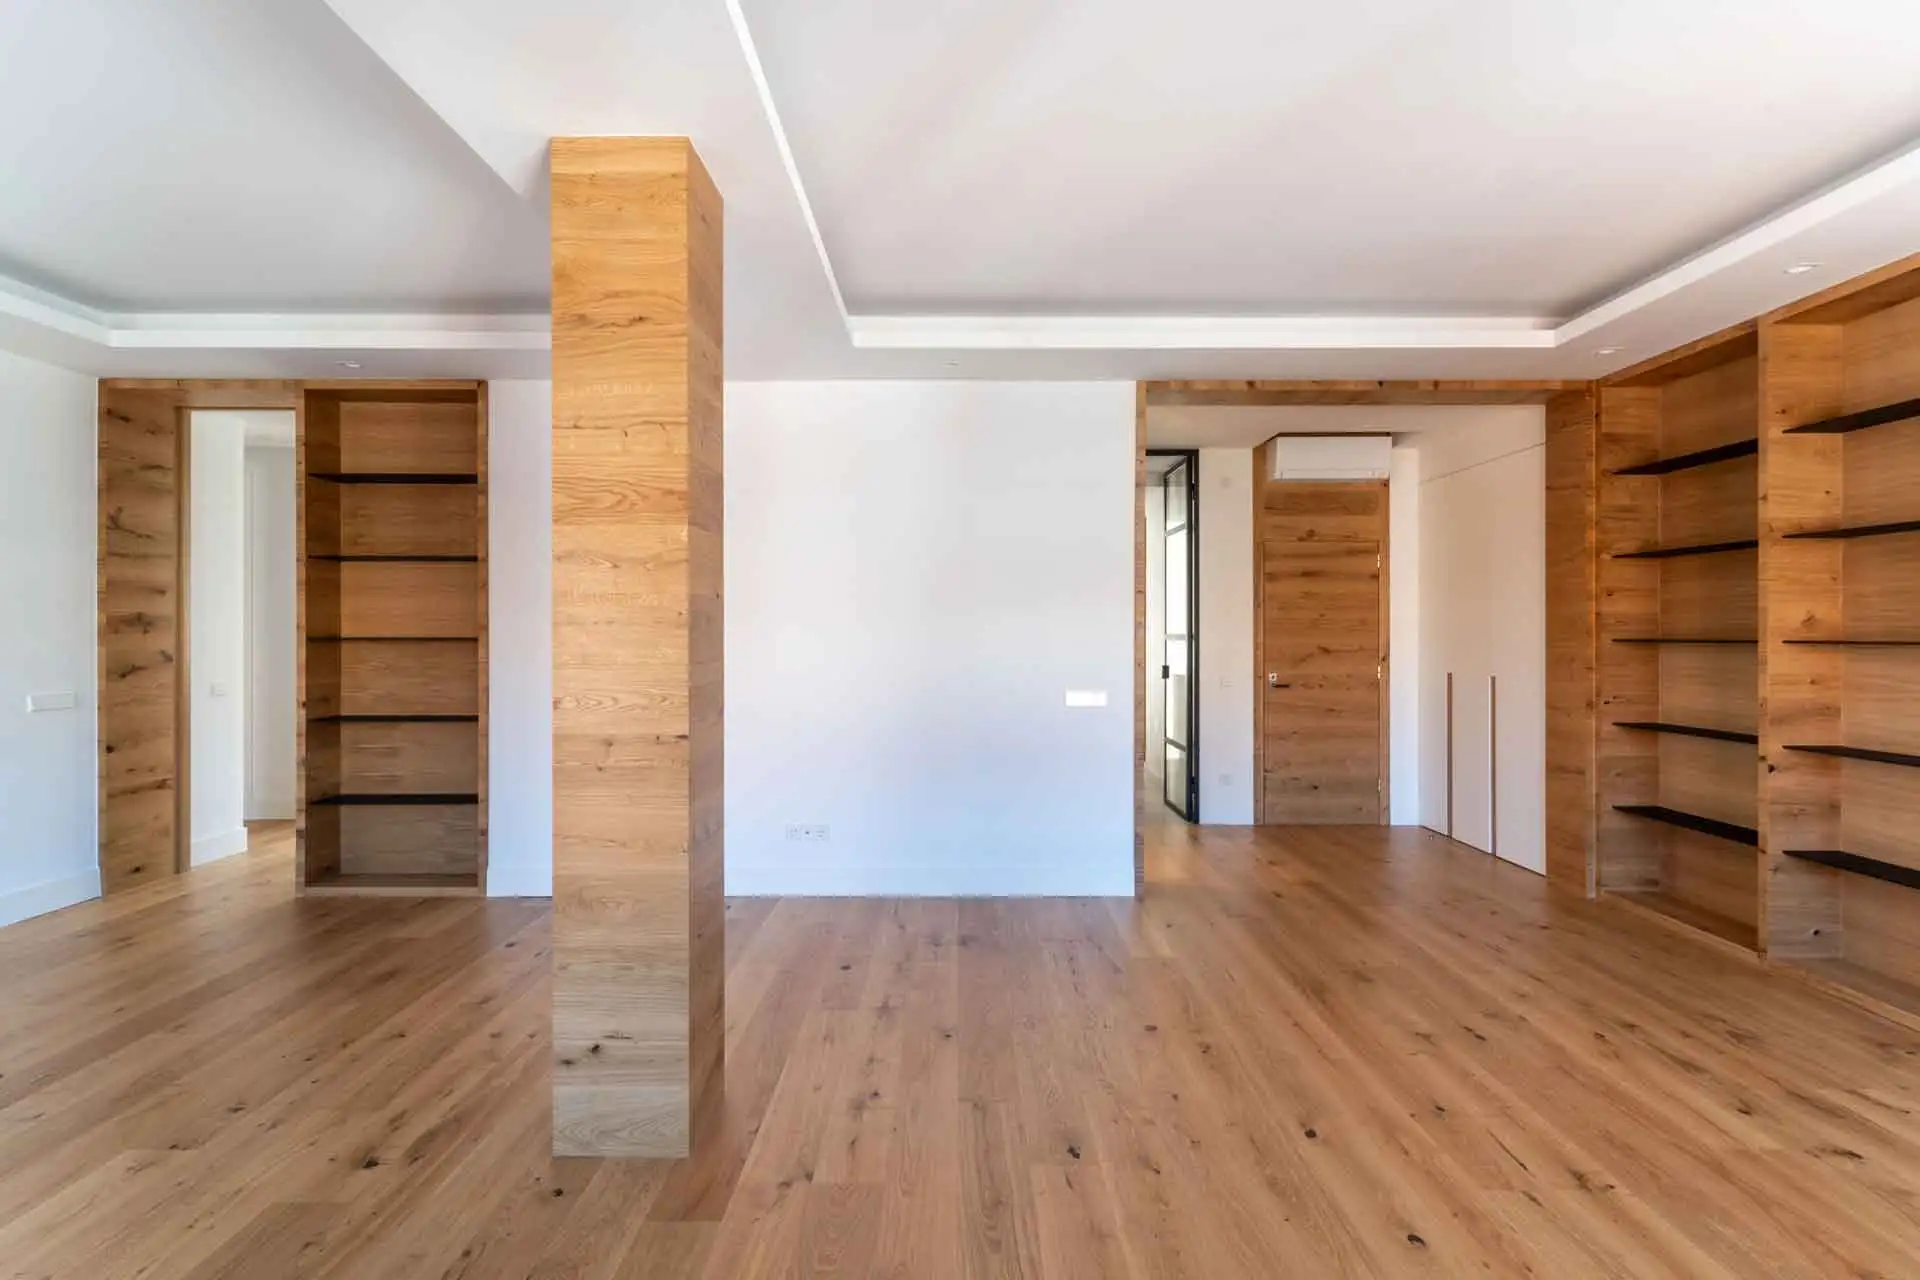 Salón de piso en Madrid, calle Menéndez Pelayo, con viga forrada de madera y estantería empotrada de madera